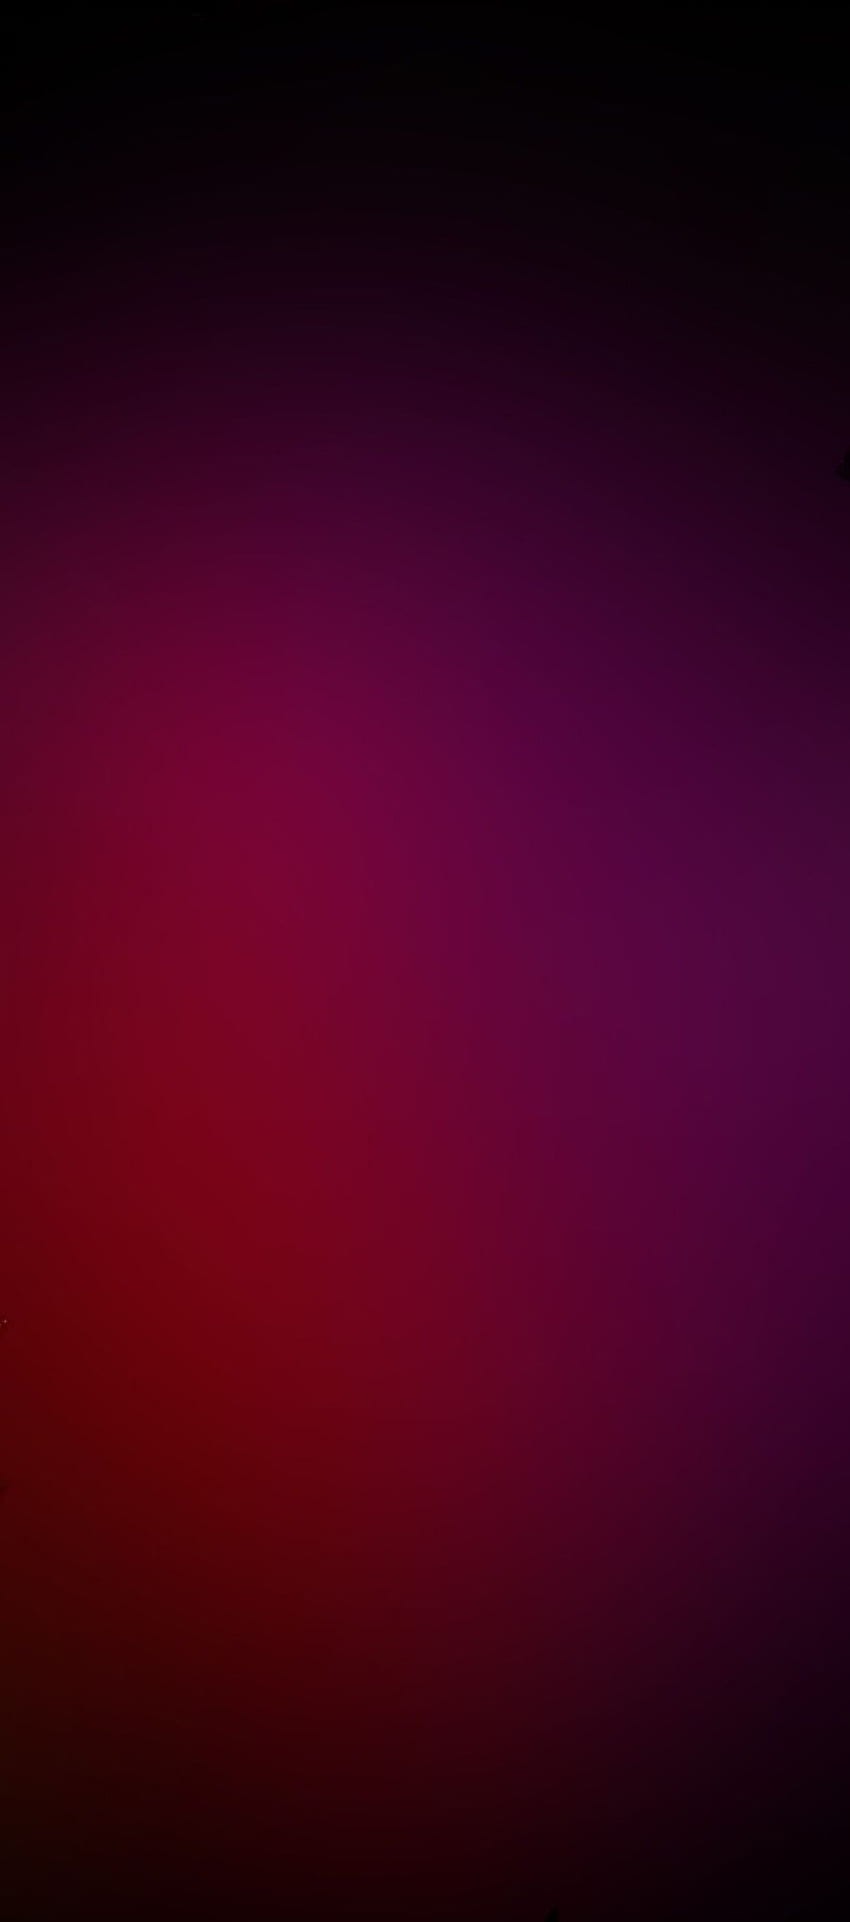 Merah, bersih, galaksi, warna, abstrak, seni digital, s8, dinding, Samsung, galaksi s8. Galaxy s8 , Oneplus , S8, Burgundy Abstrak wallpaper ponsel HD